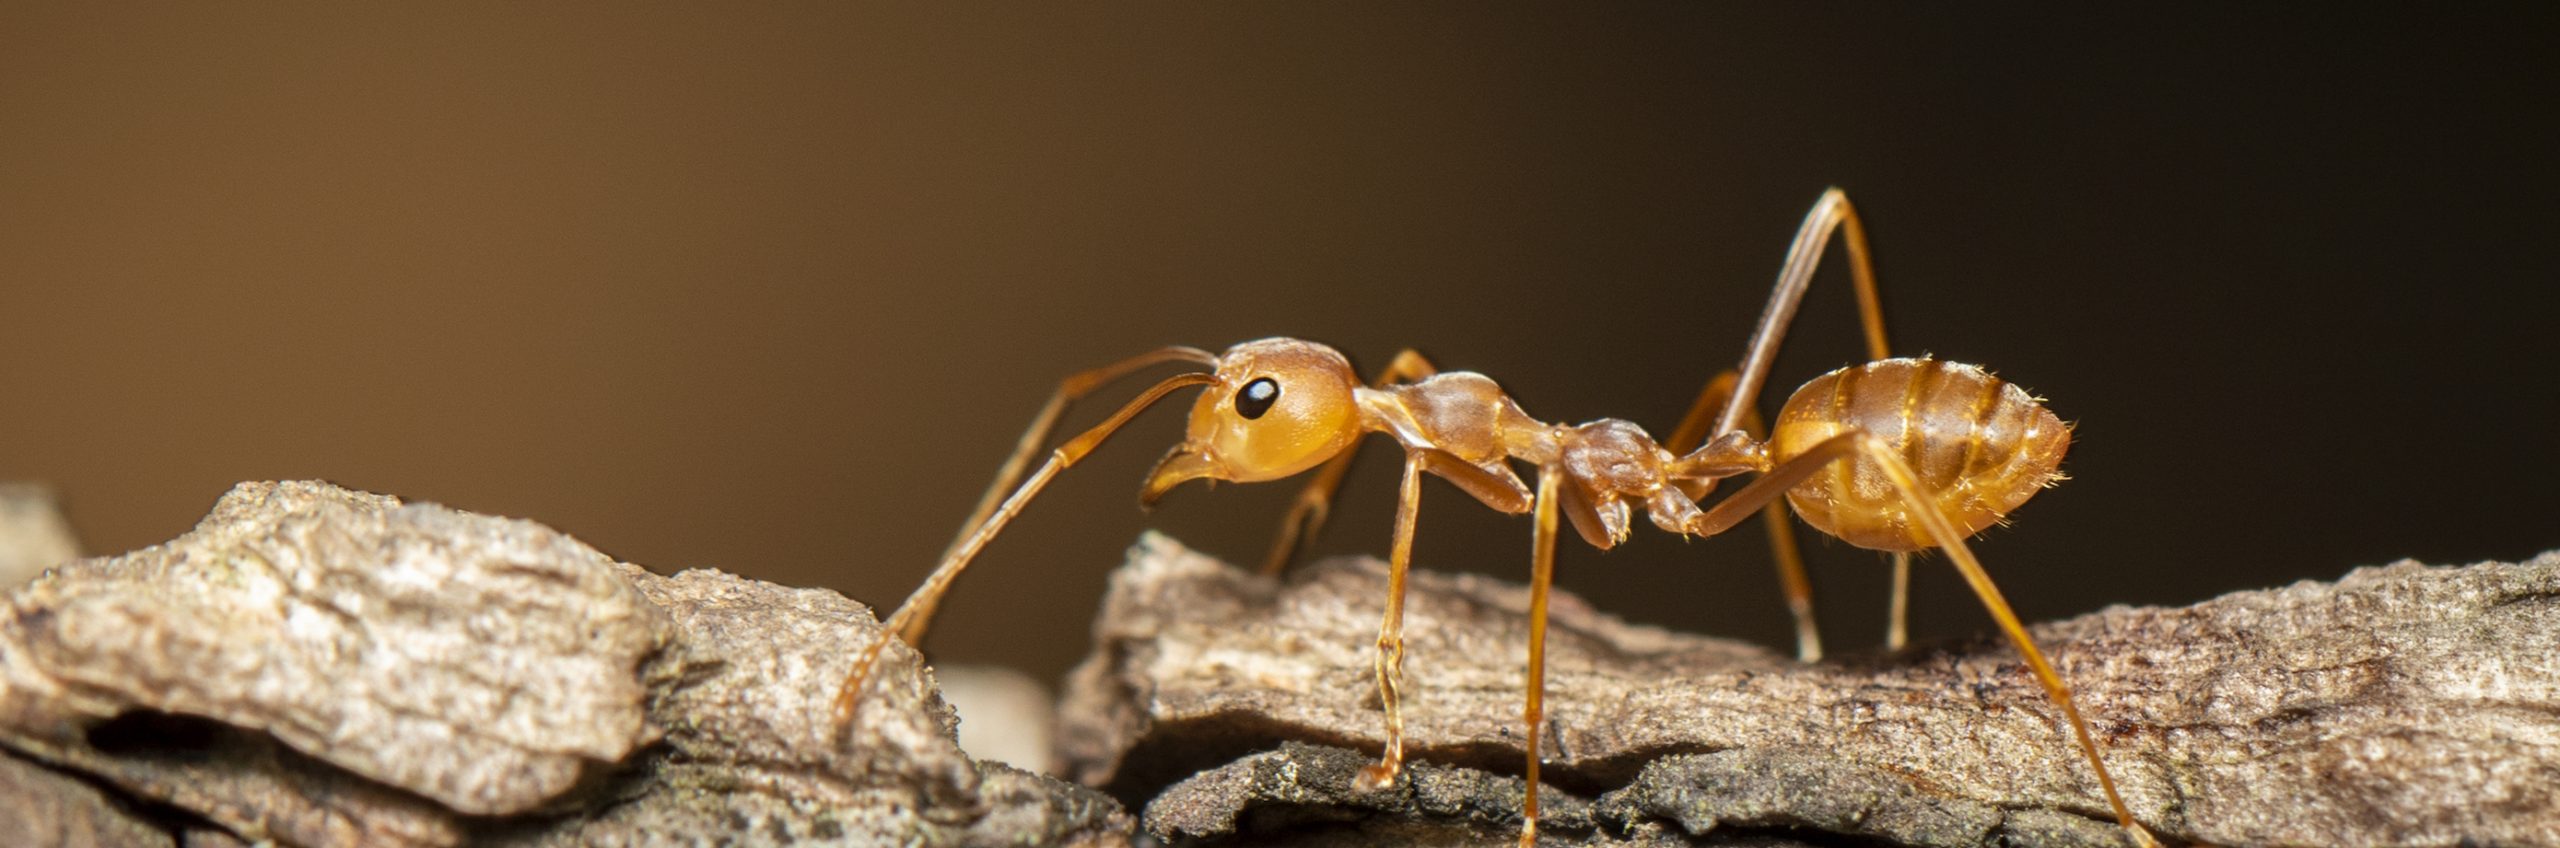 Ant infestation pest control